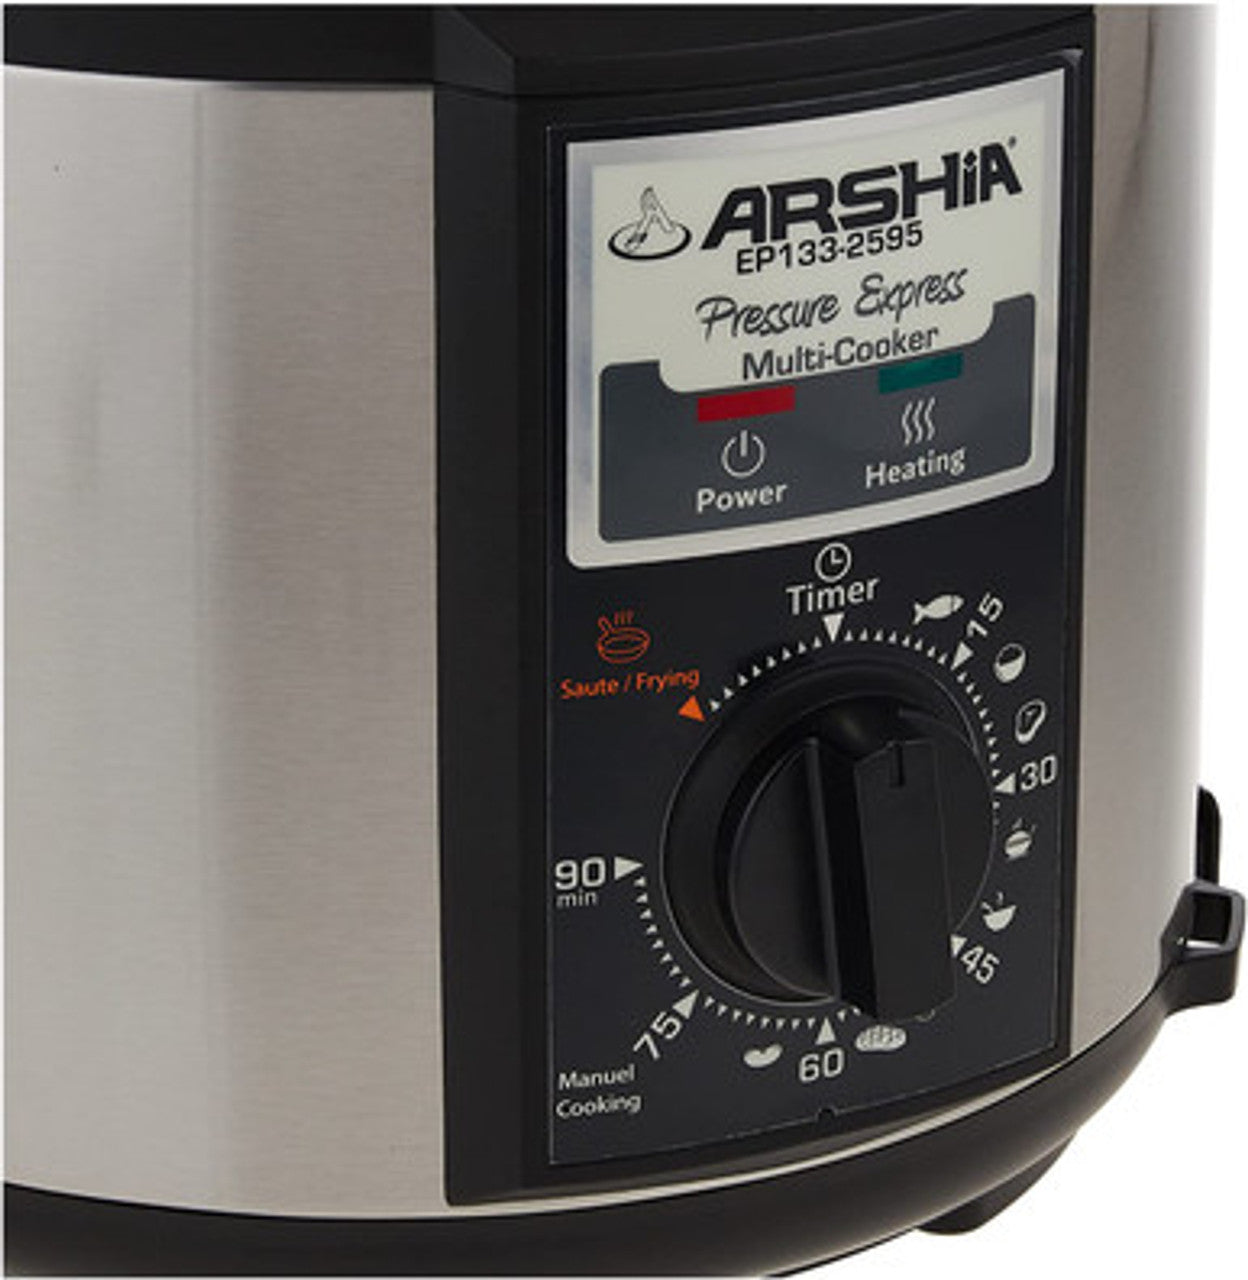 Arshia 6 Liter Multi cooker